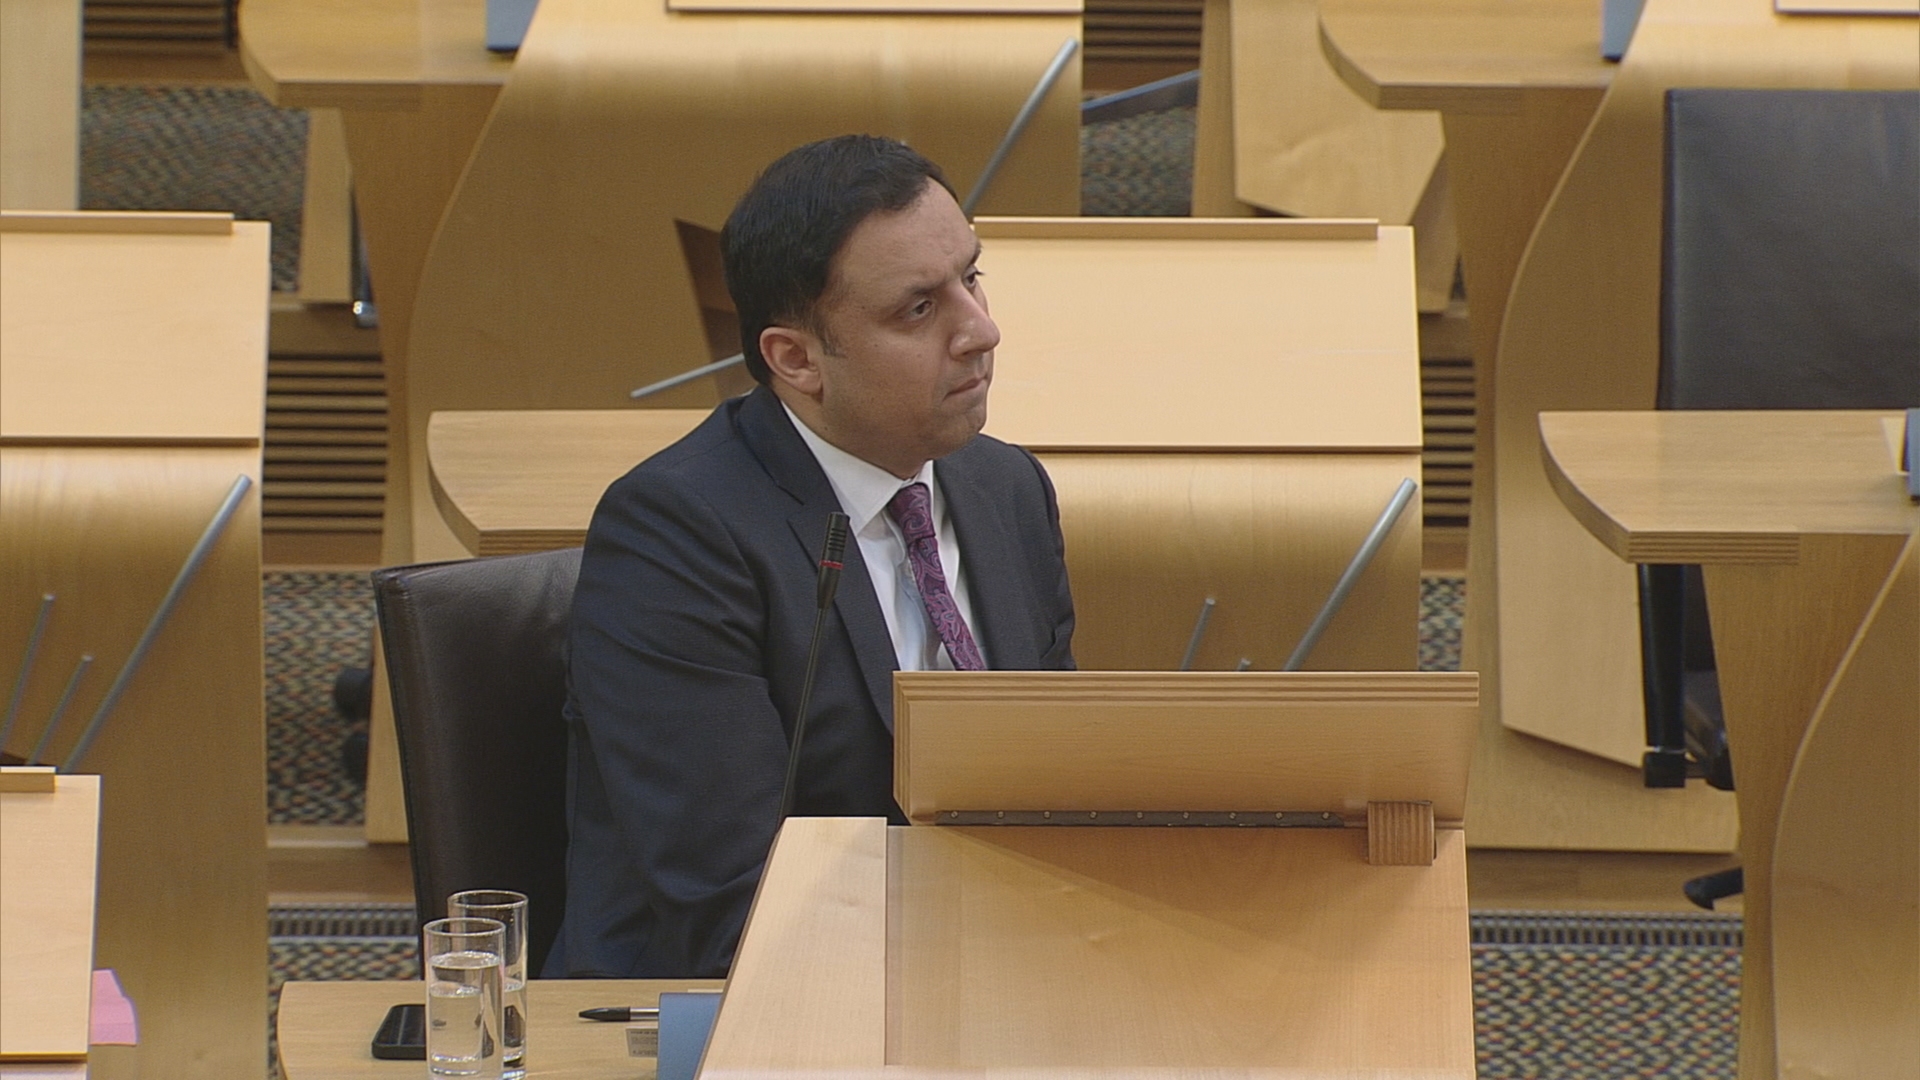 Anas Sarwar raised concerns over care homes. (Scottish Parliament TV)